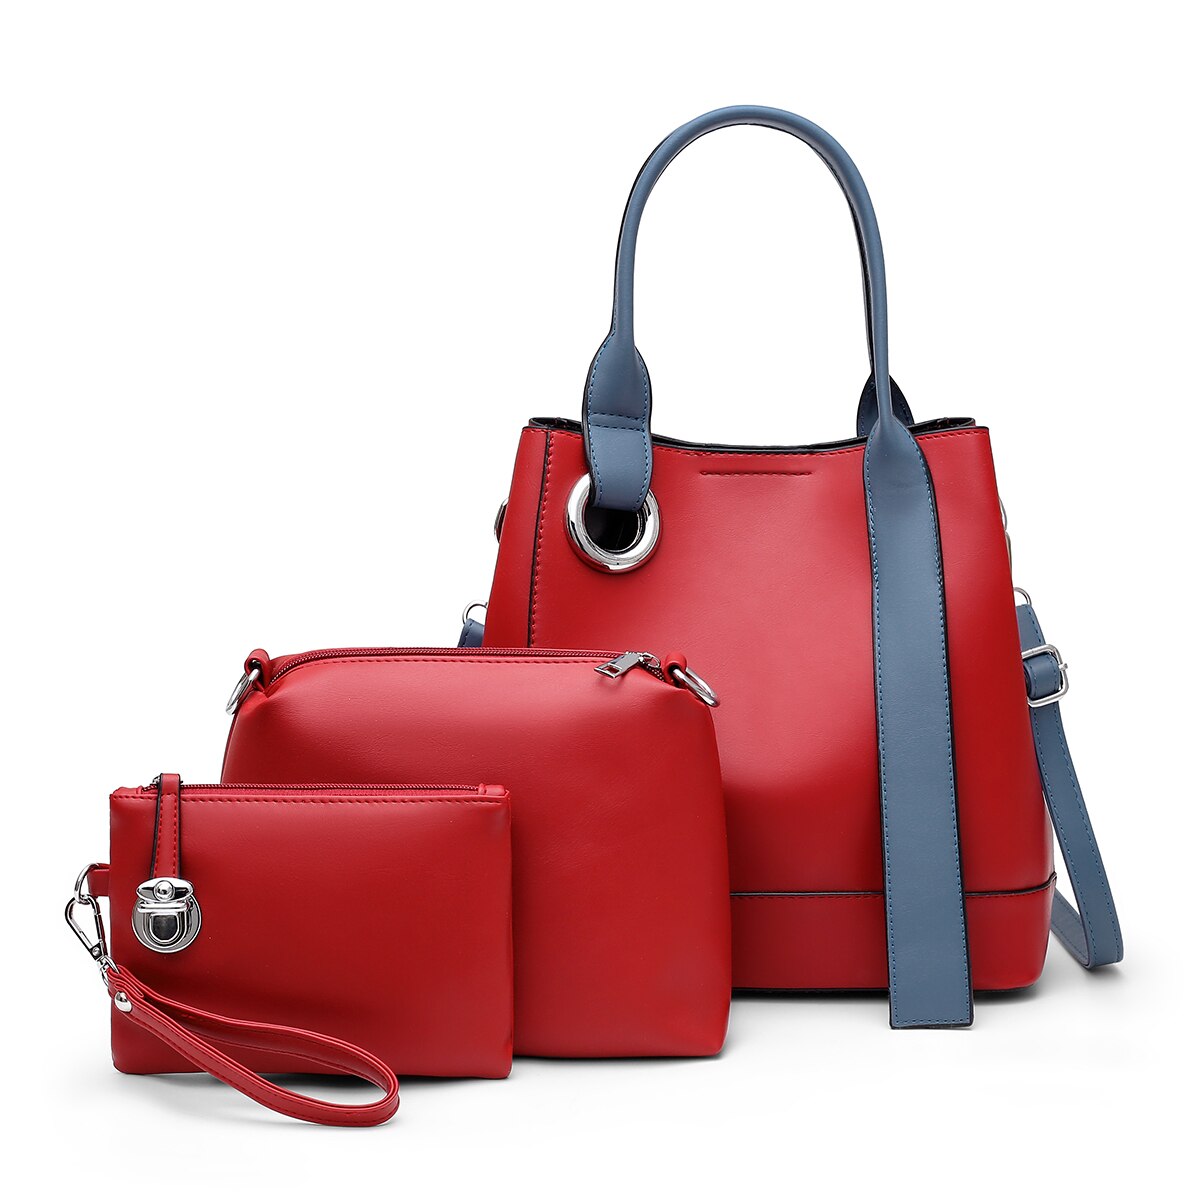 Luxury Women Pu Leather Handbags High Quality Ladies Large Capacity 3 Pieces Set Shoulder Bag Fashion Female Tote Messenger Bags